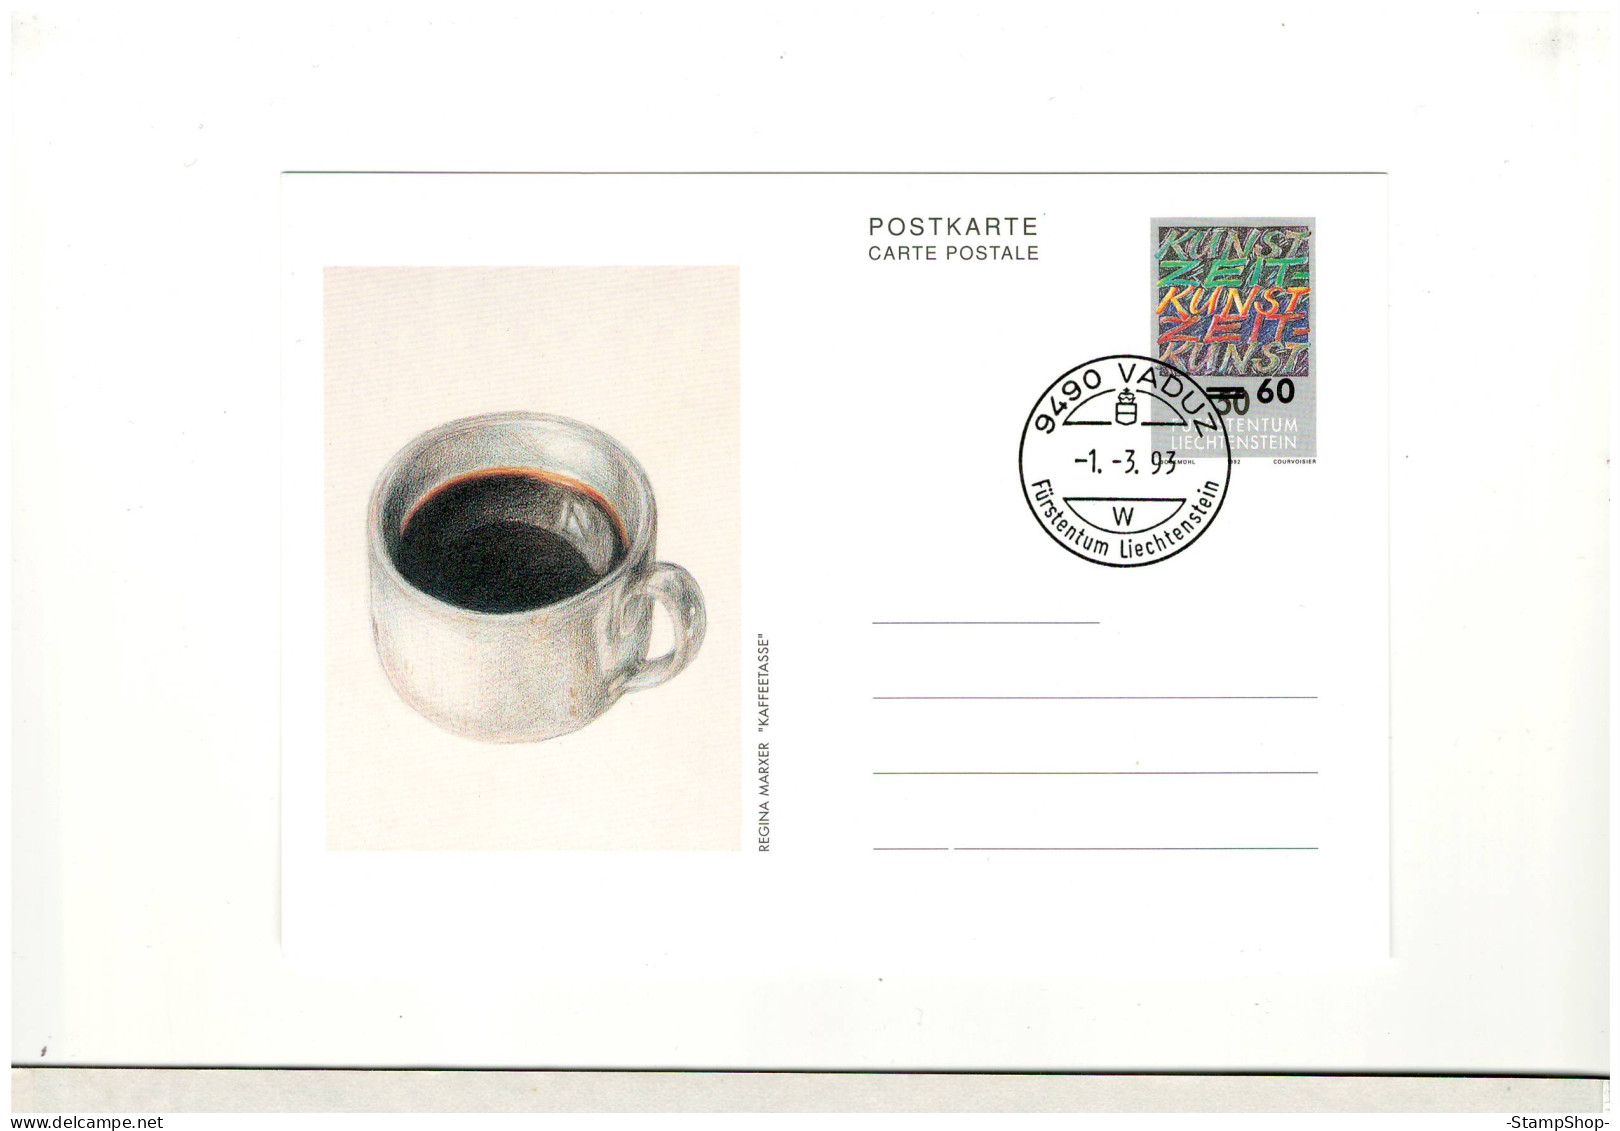 1993 Liechtenstein - Vaduz Postmark, Art, Overprint With Higher Value - Postcard - BX2052 - Briefe U. Dokumente